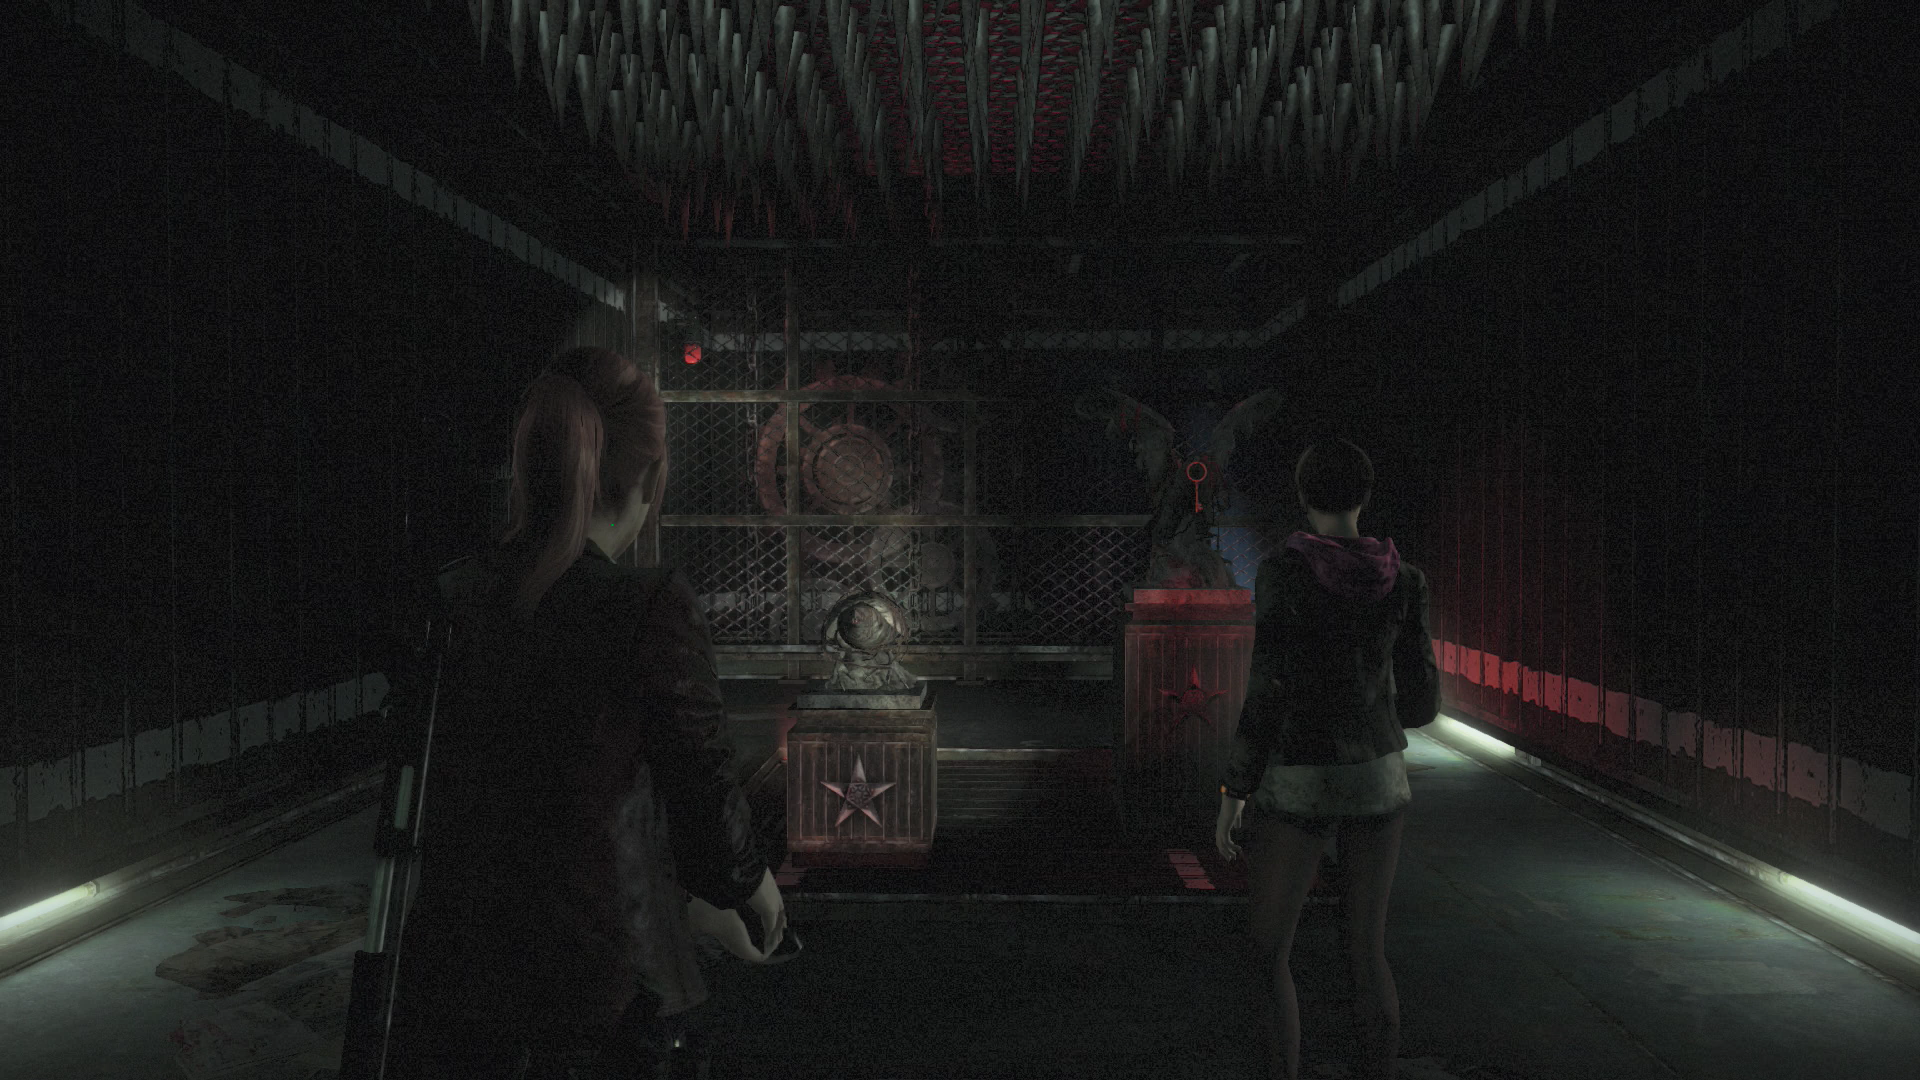 Joystickin' With Jorge Resident Evil Revelations 2 Screen Shot 2015-03-13 06-55-49